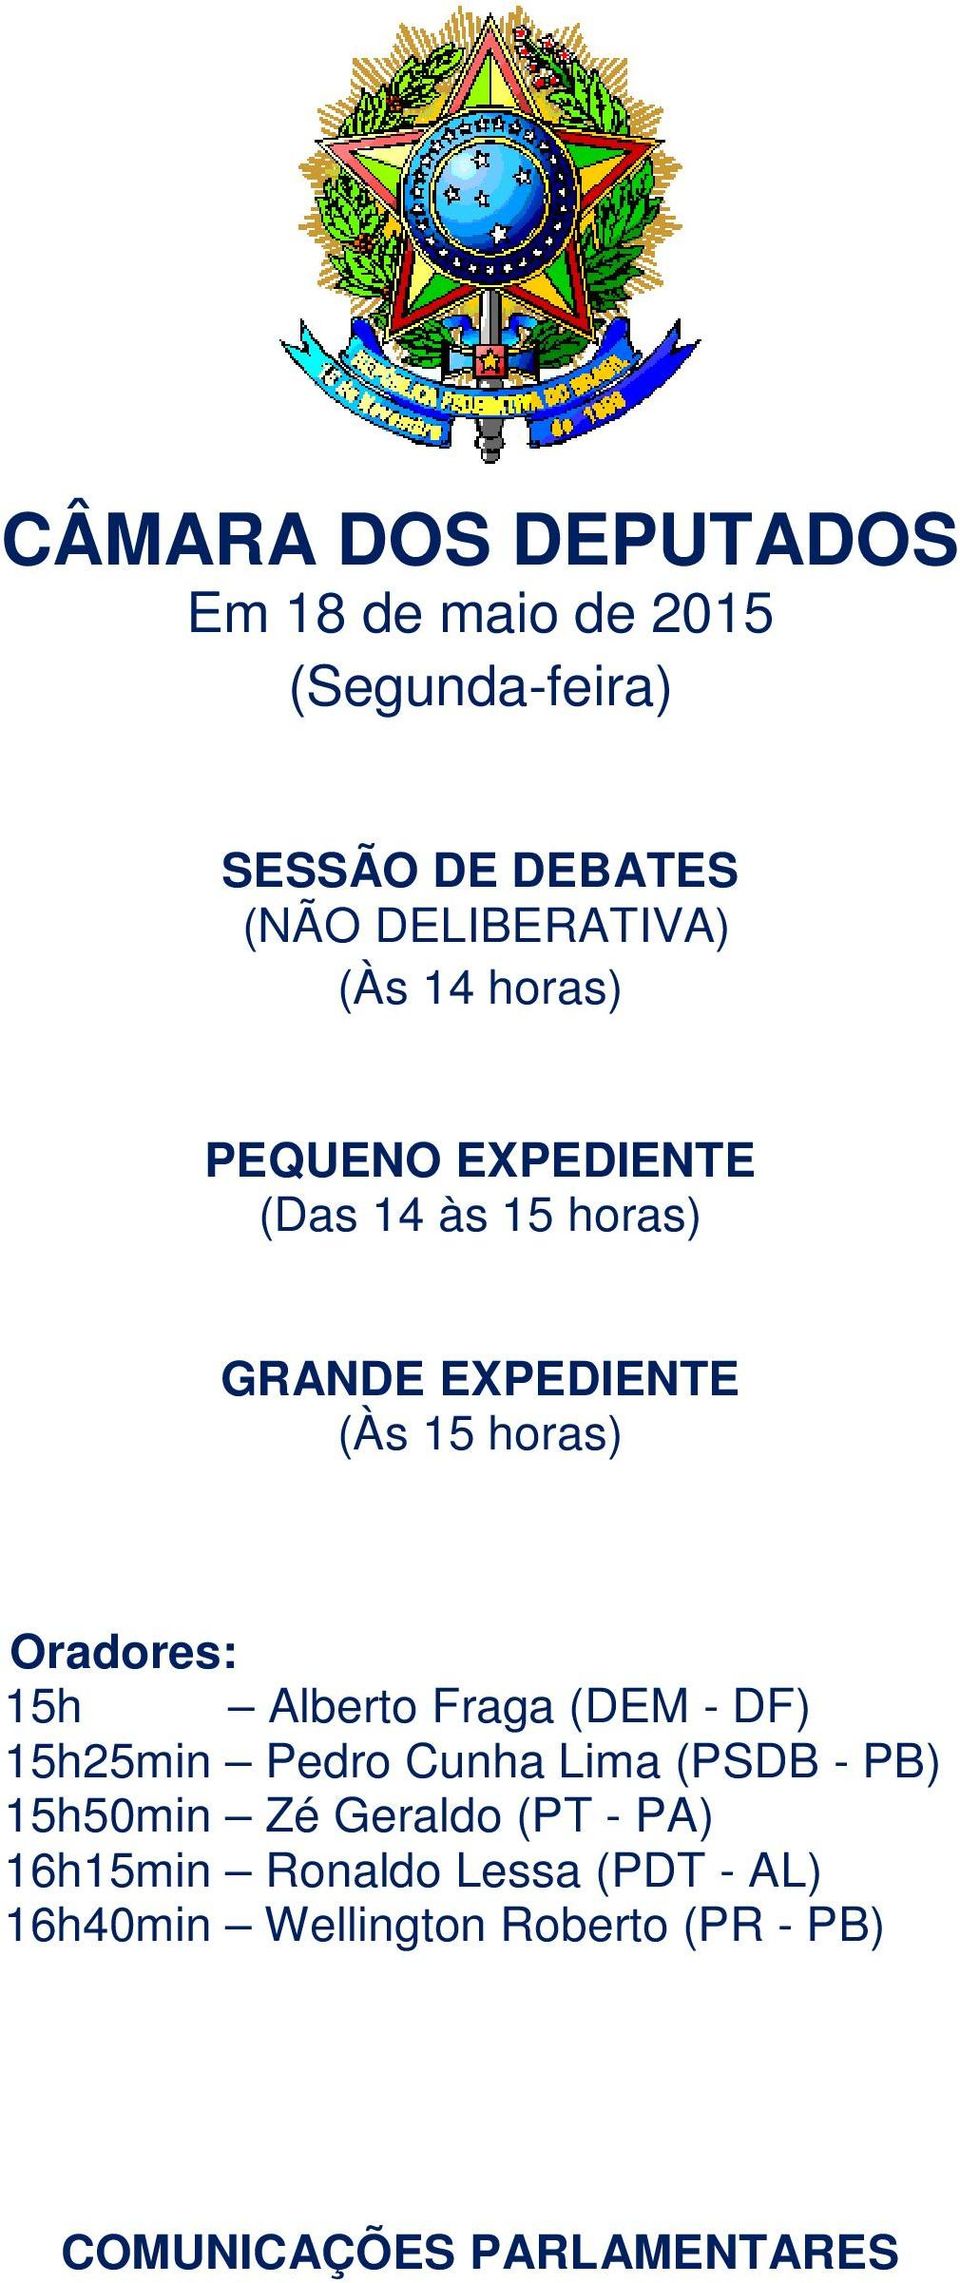 15h Alberto Fraga (DEM - DF) 15h25min Pedro Cunha Lima (PSDB - PB) 15h50min Zé Geraldo (PT - PA)